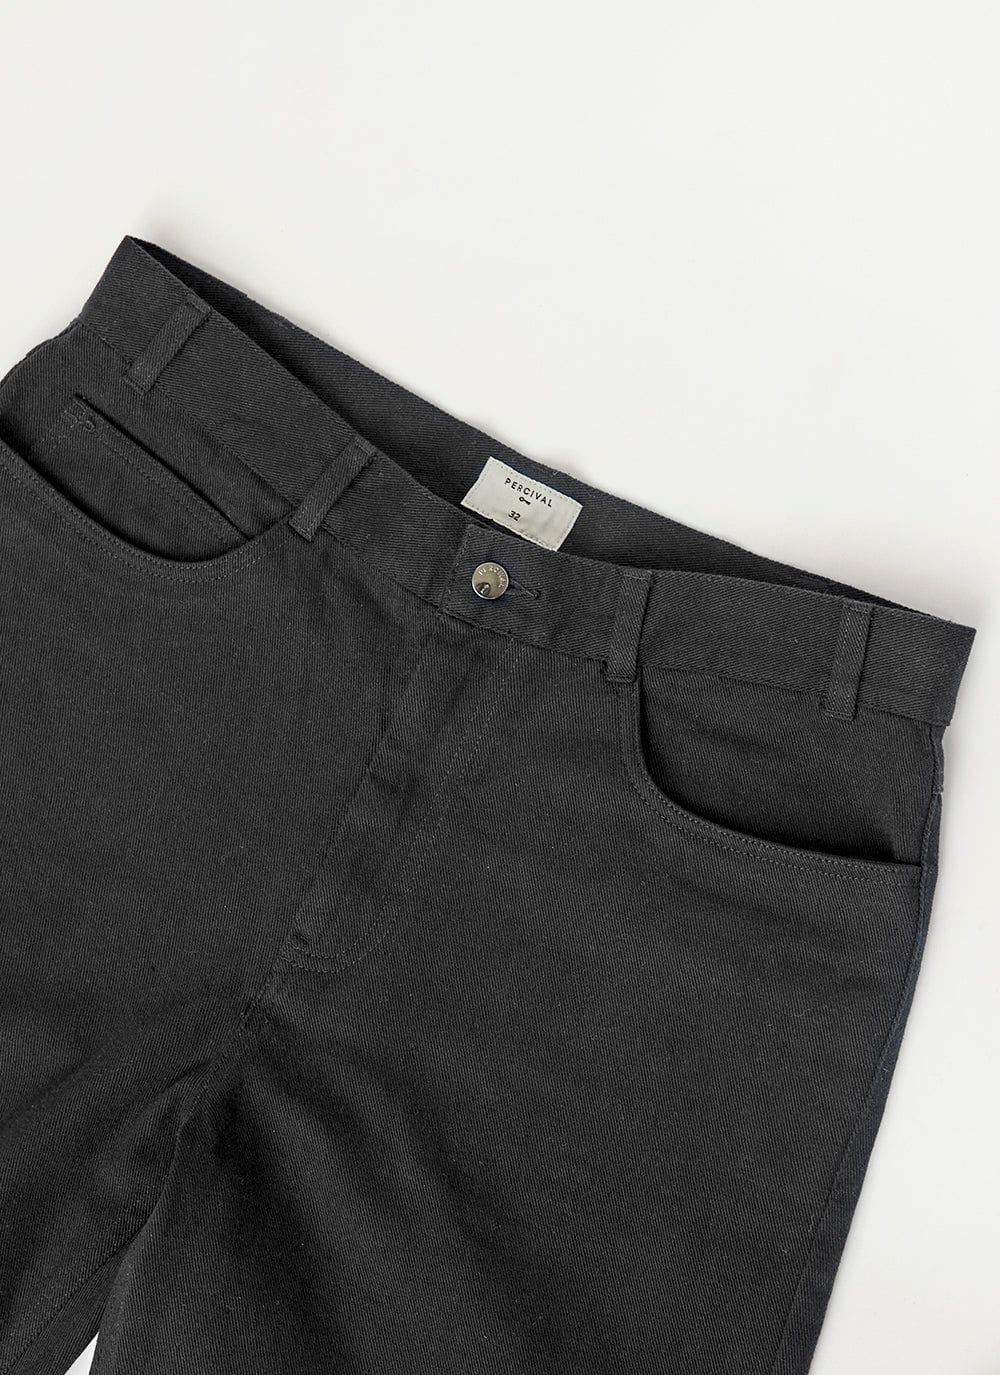 Men's 5 Pocket Trousers, Black Twill